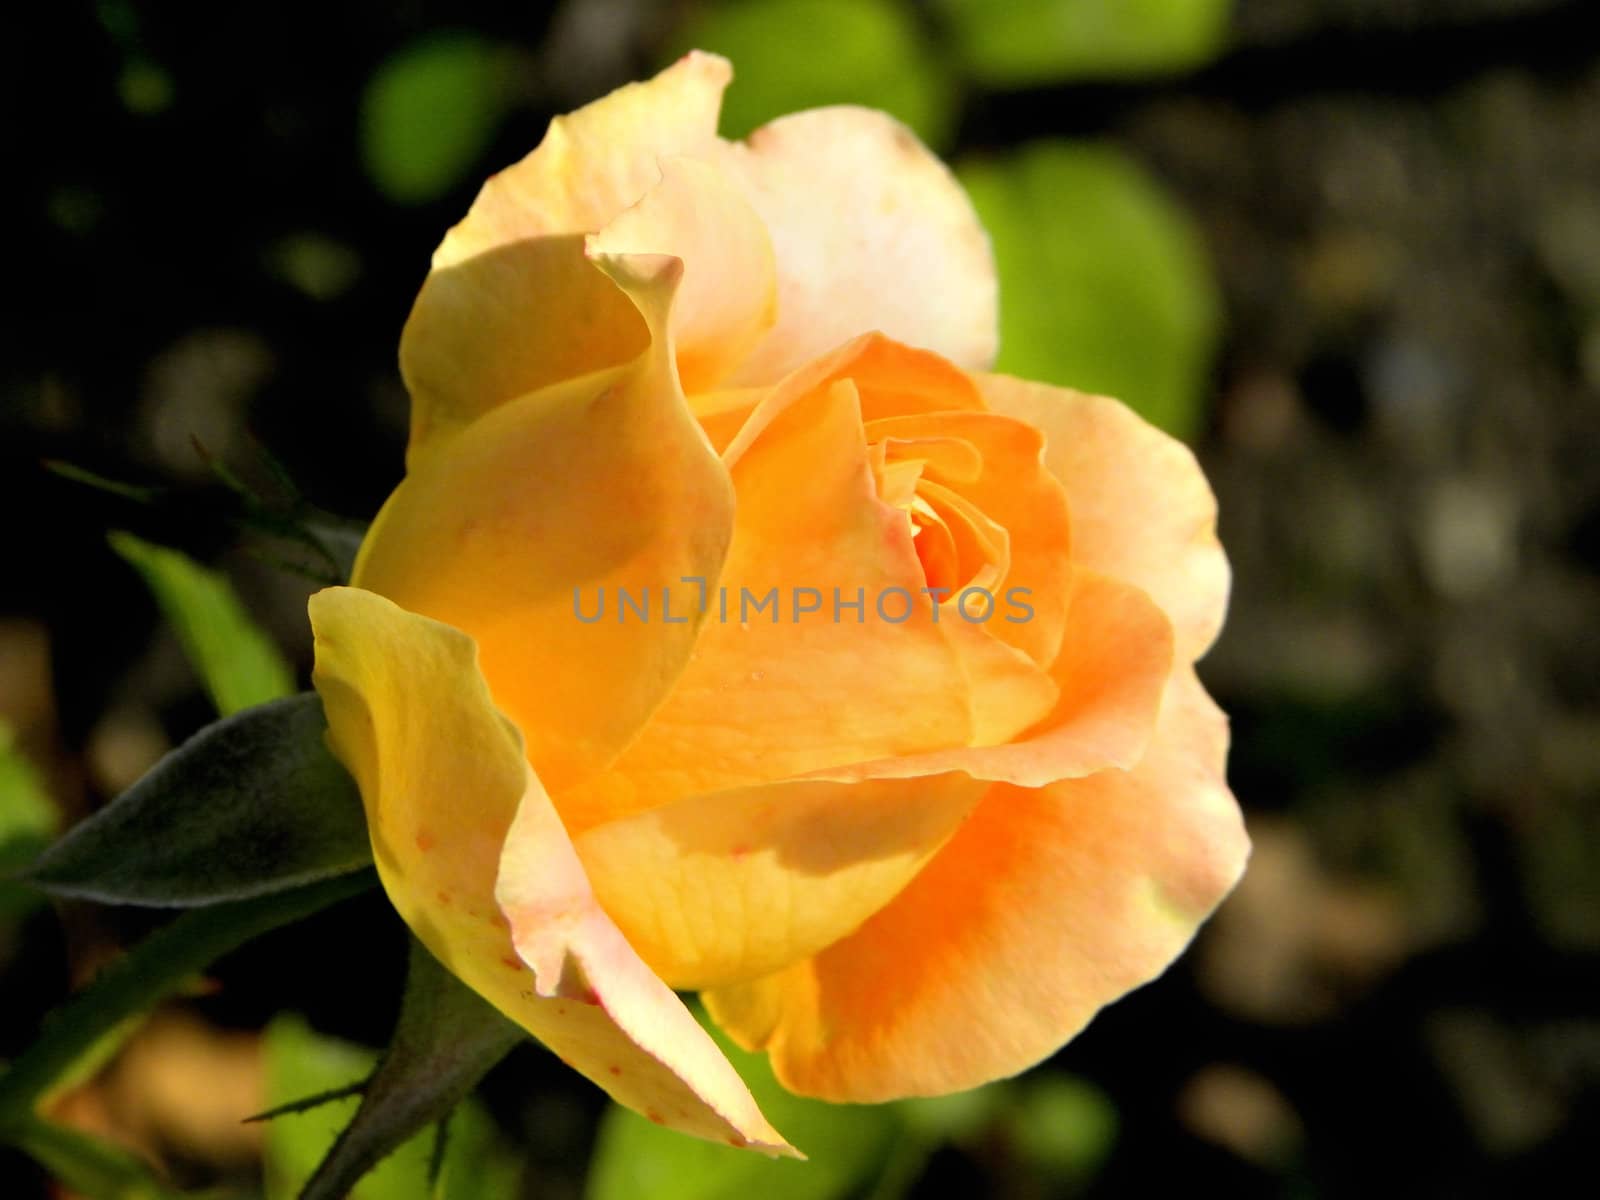 Simple orange rose  in a  public garden, nice blurred background.